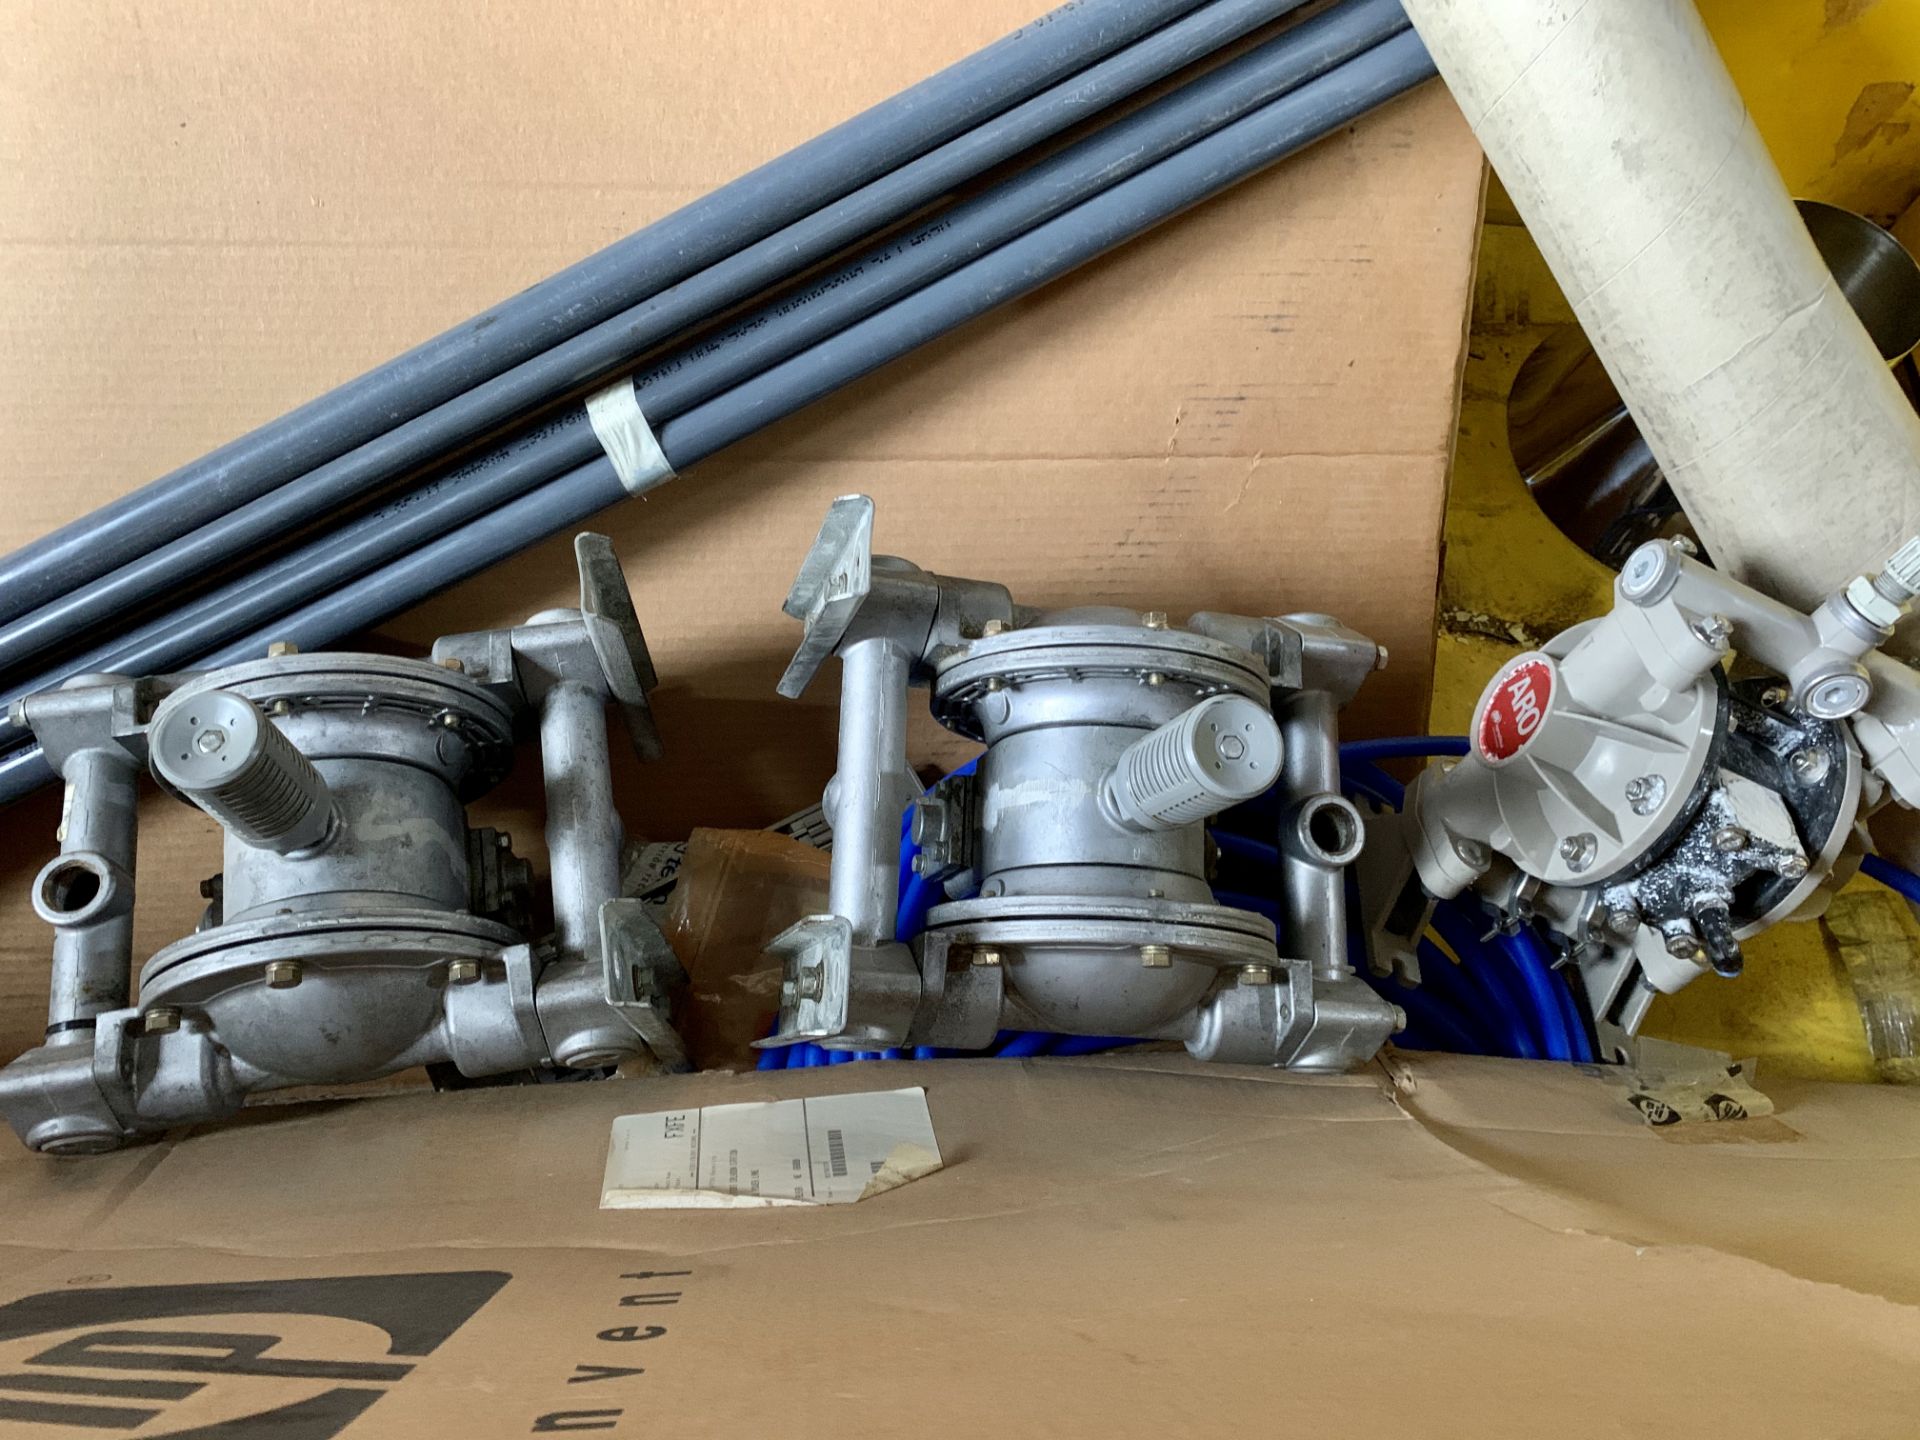 Steel Stillage (88"x44") of Assorted ARO Pumps, Plumbing & Server Parts - Image 2 of 4